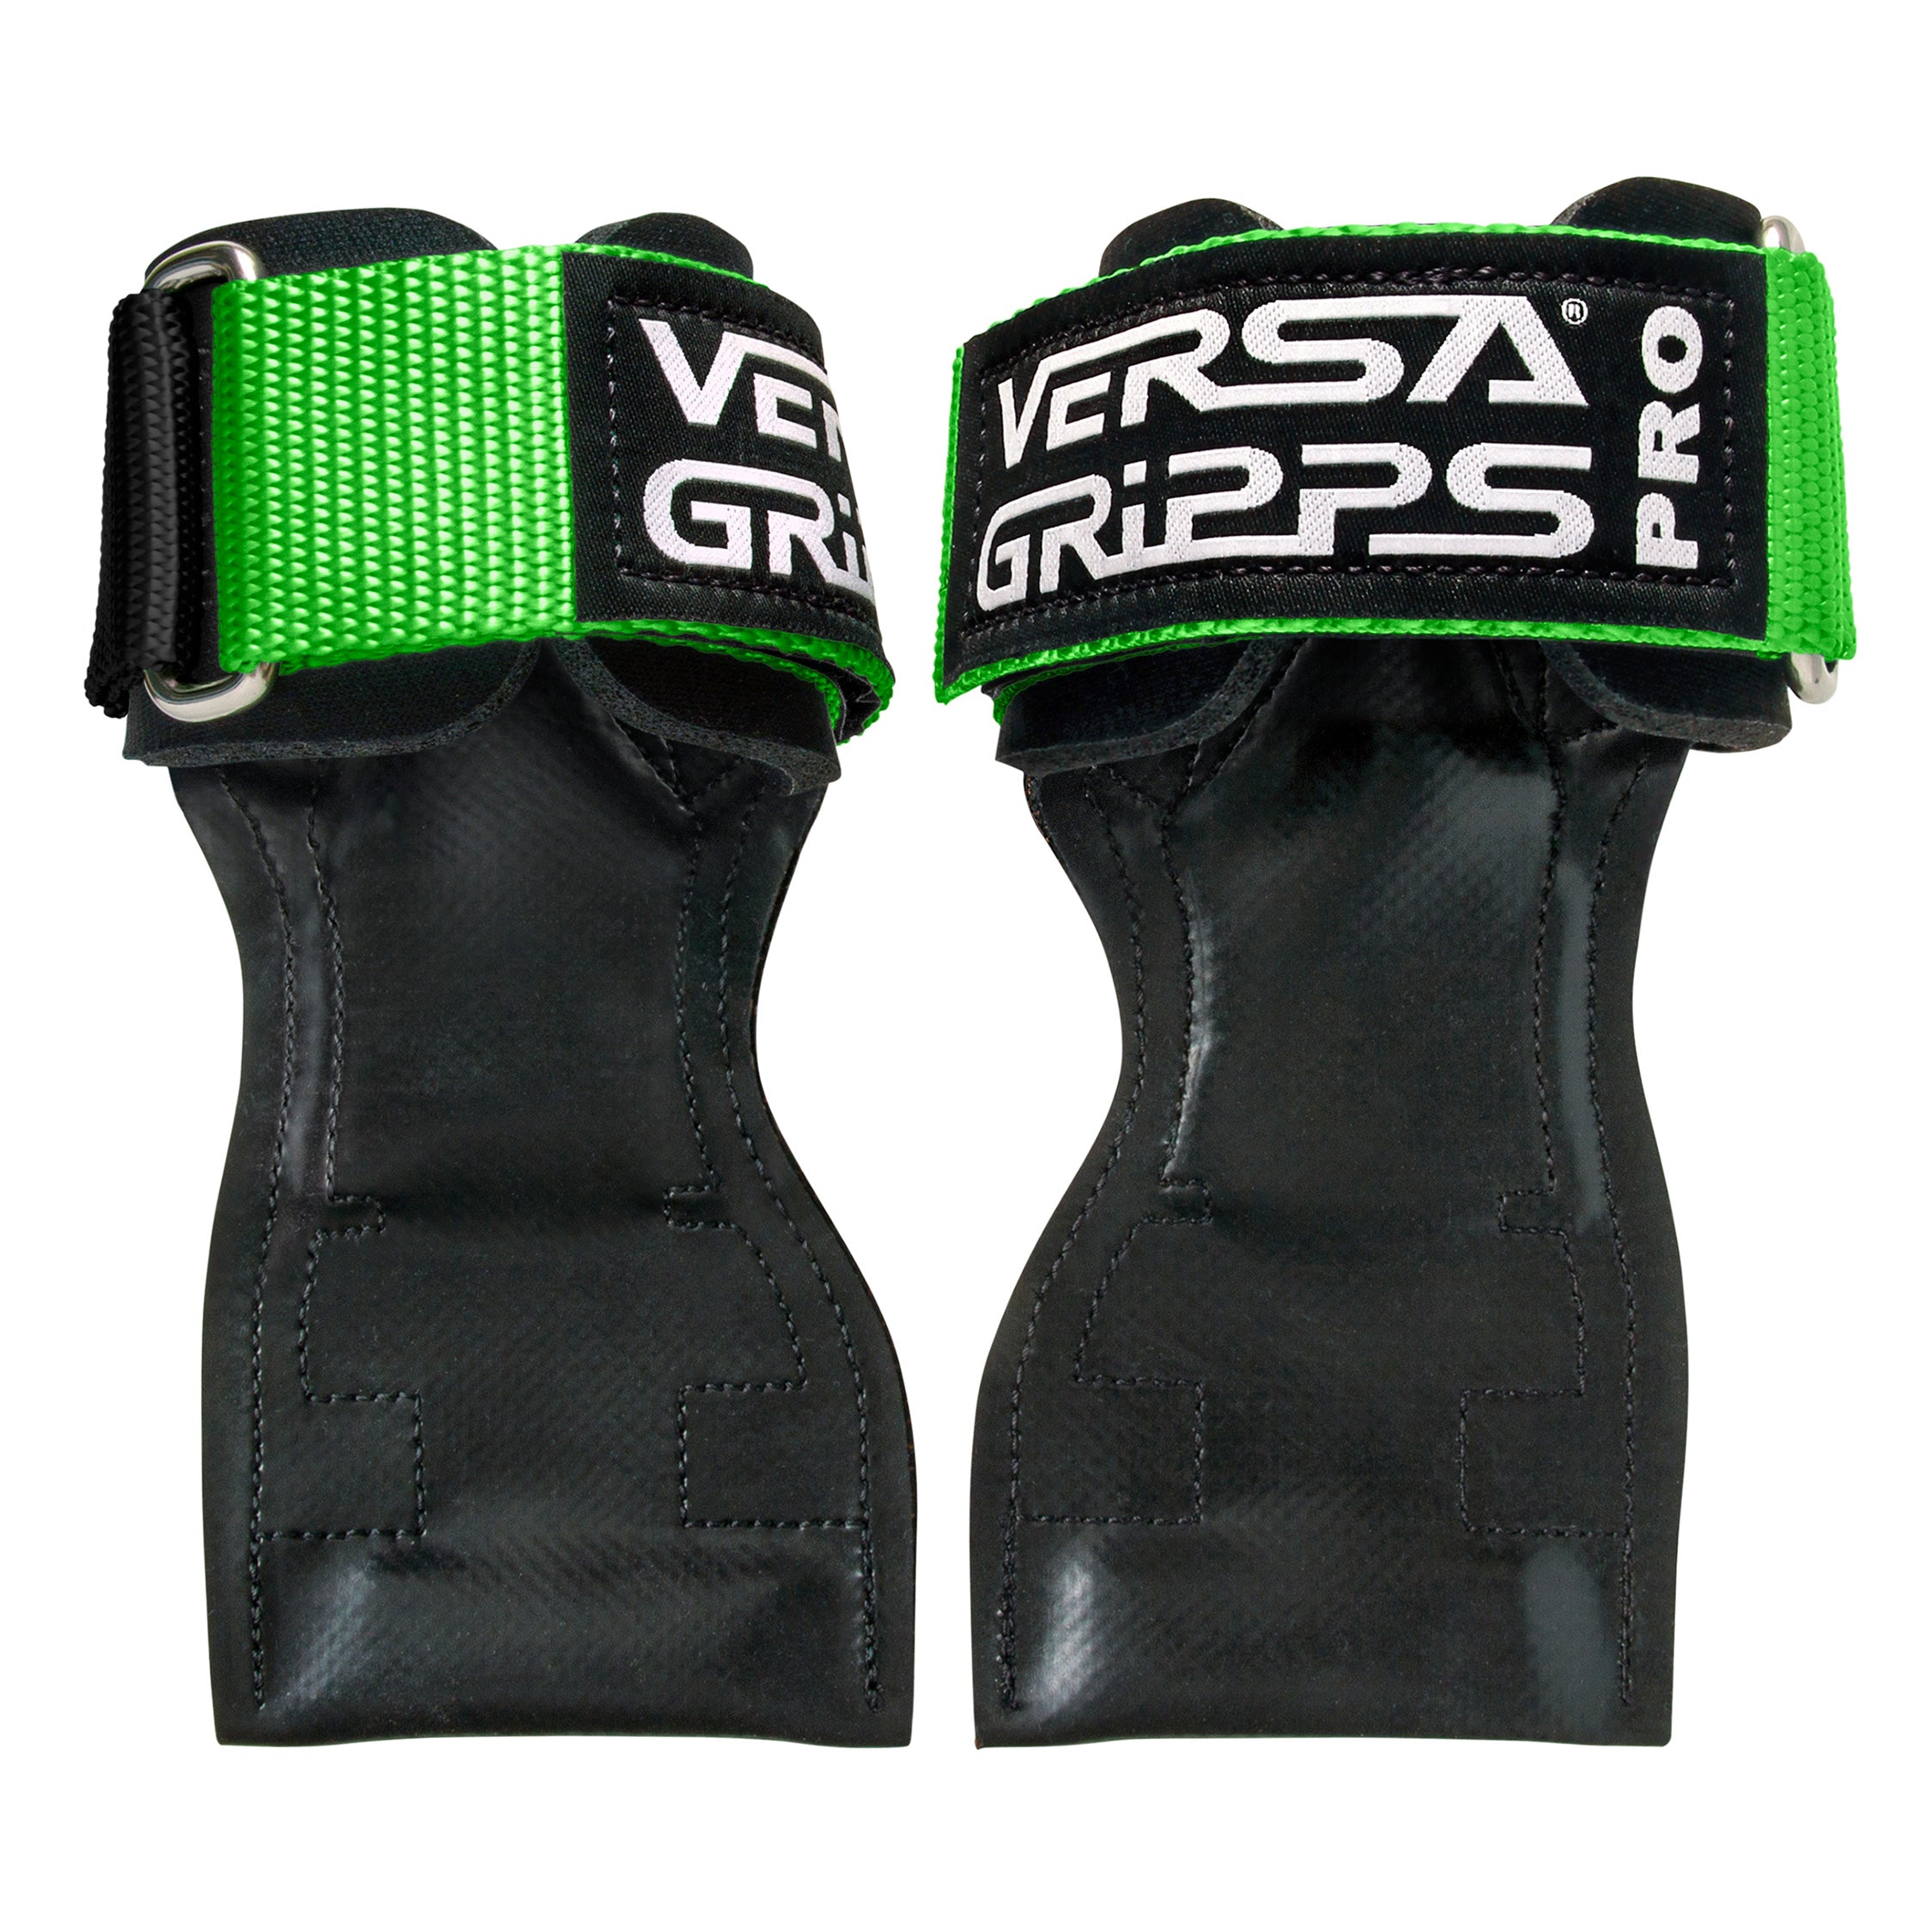 Versa Gripps Pro Series Lifting Straps